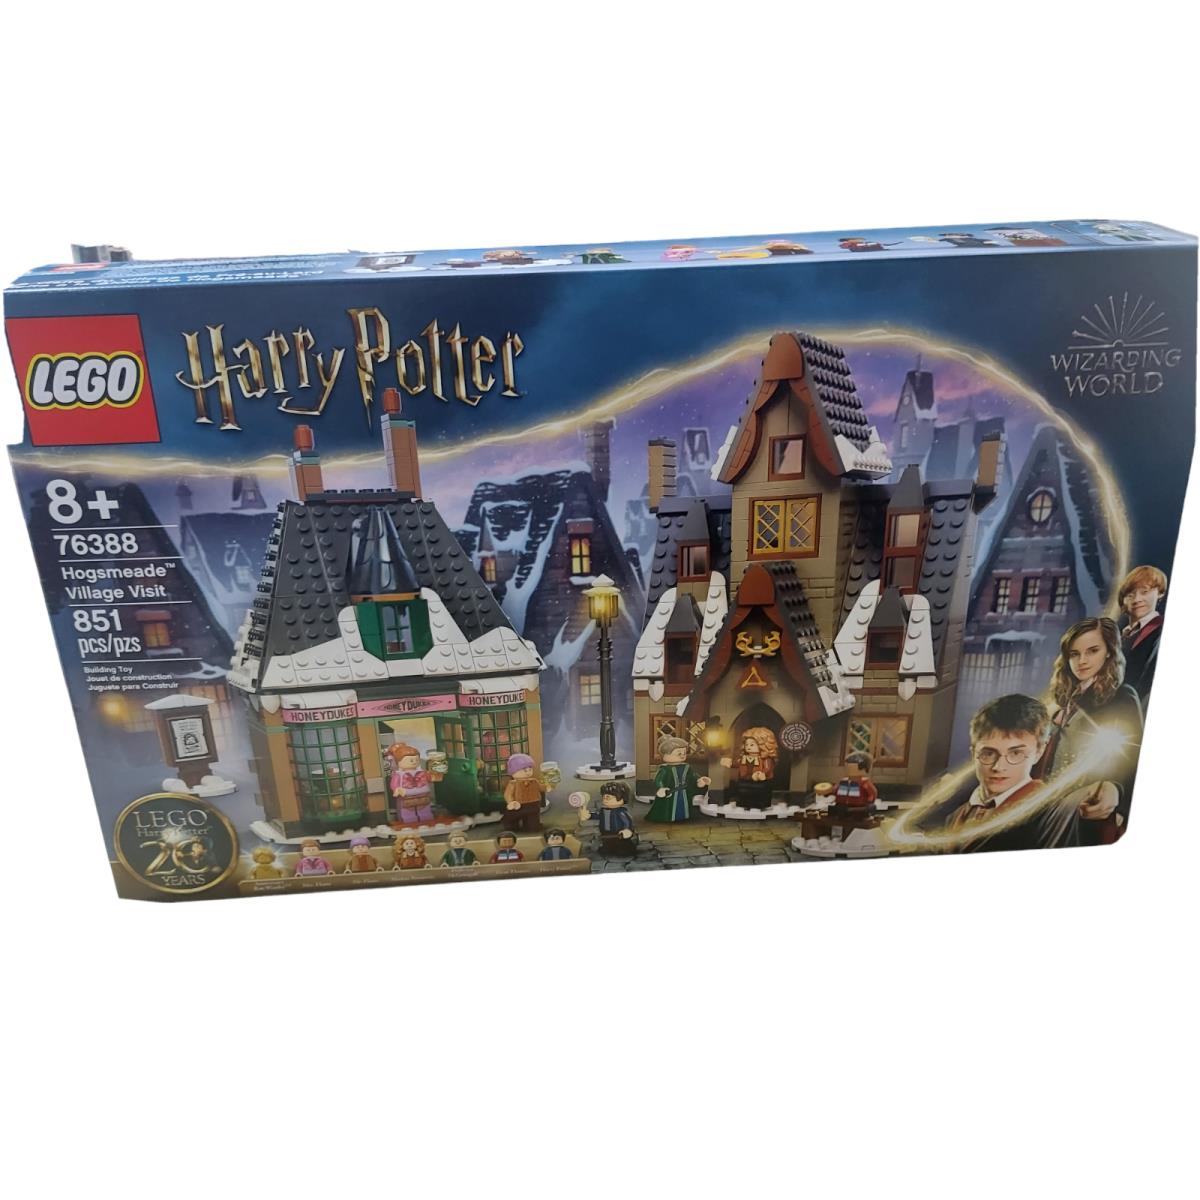 Lego Harry Potter- Hogsmeade Village Visit 76388 Box